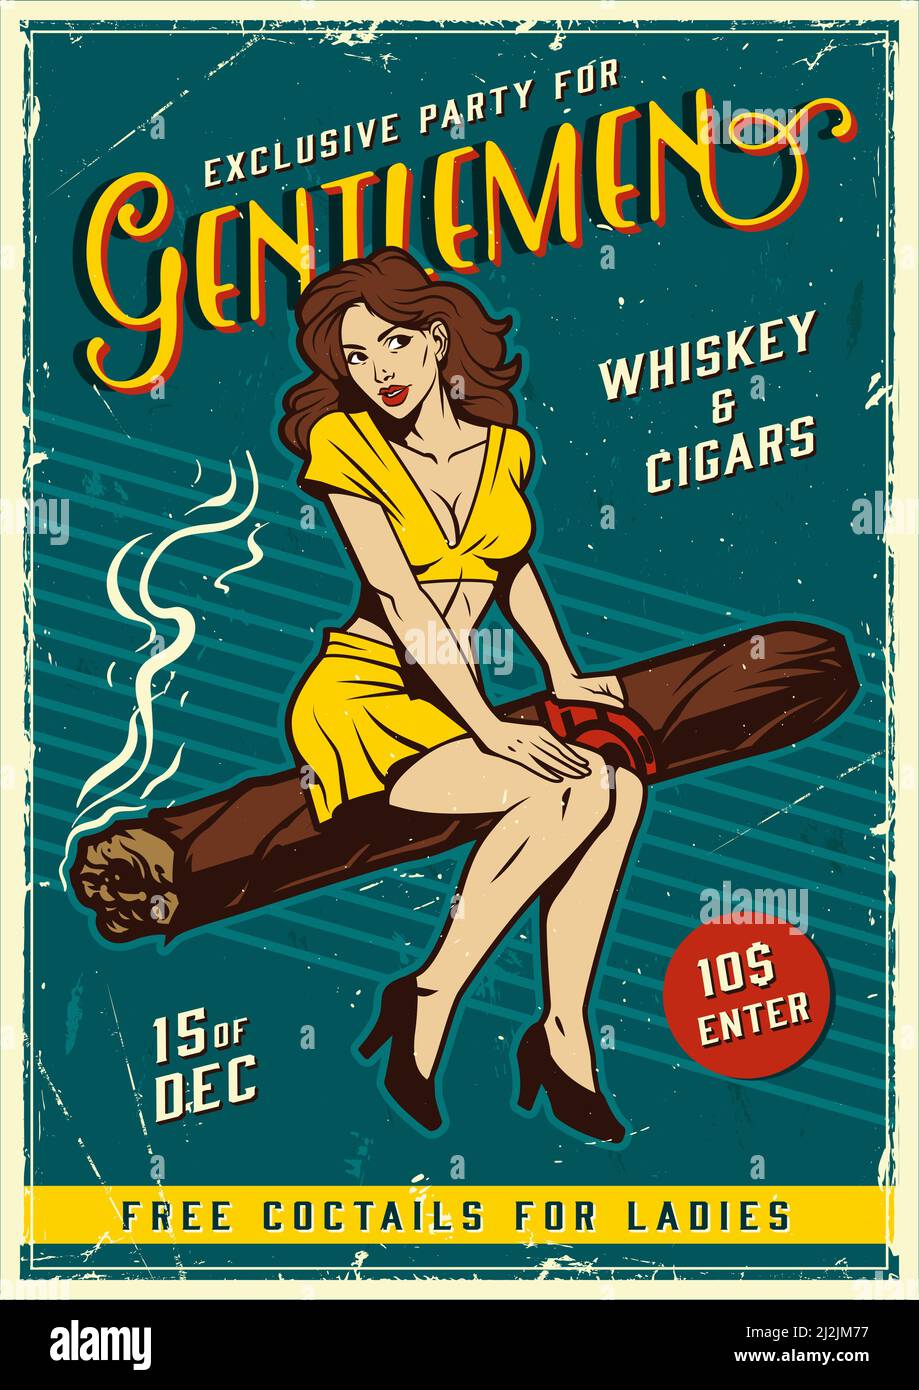 cuban vintage cigar posters